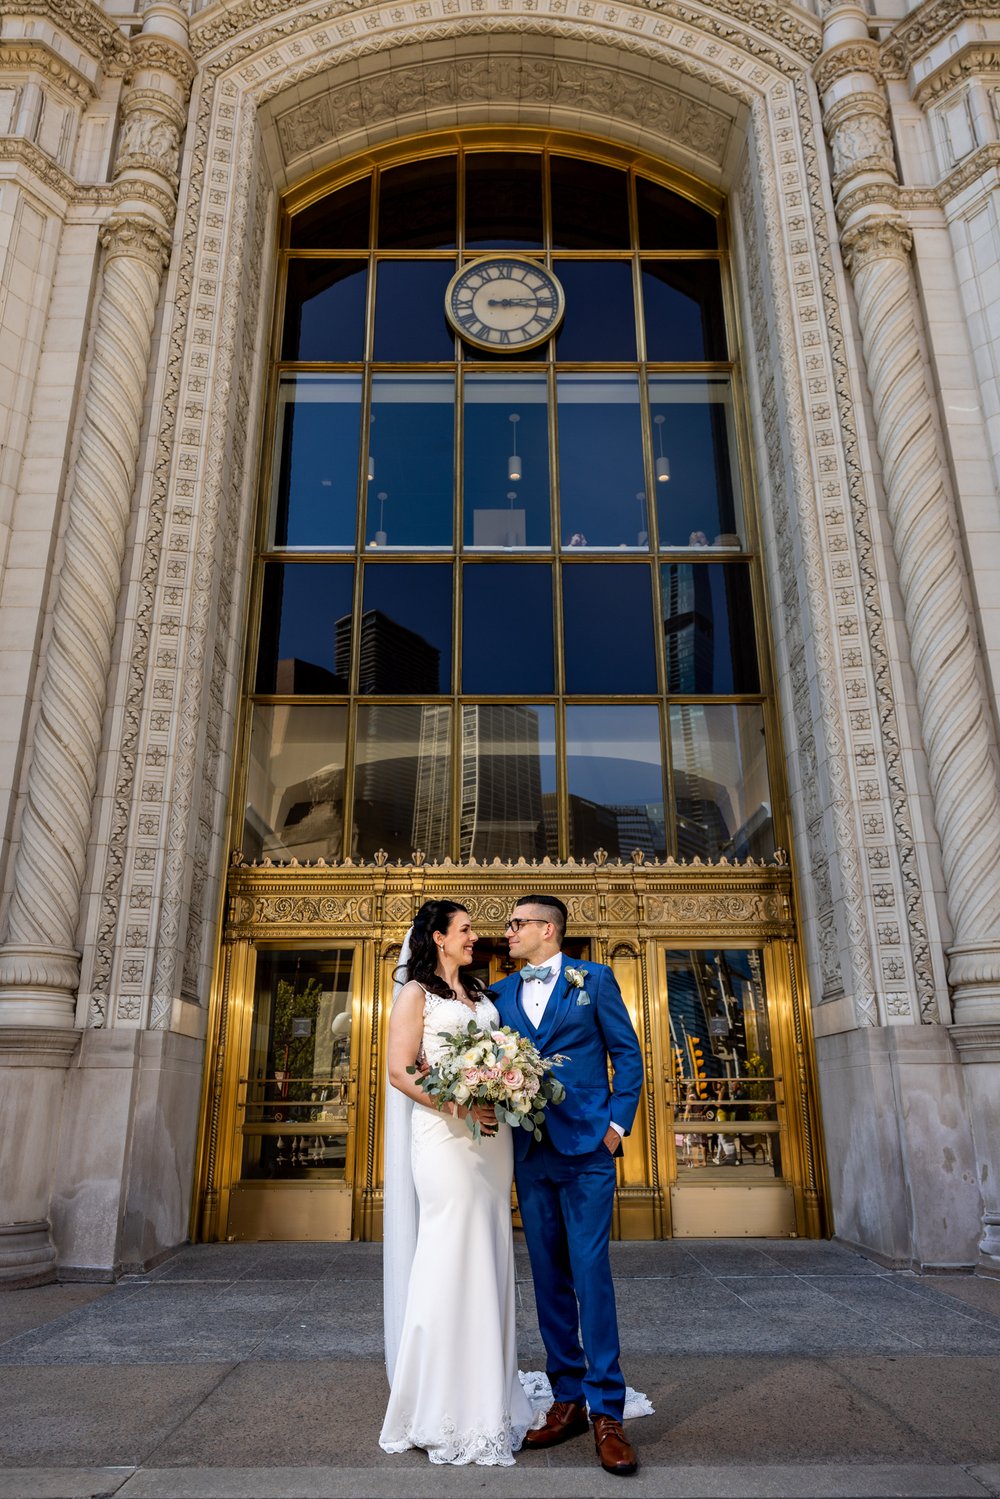 Alex Maldonado Photography | Chicago Wedding Photographer | wedding photos at wrigley building gold trim famous.jpg